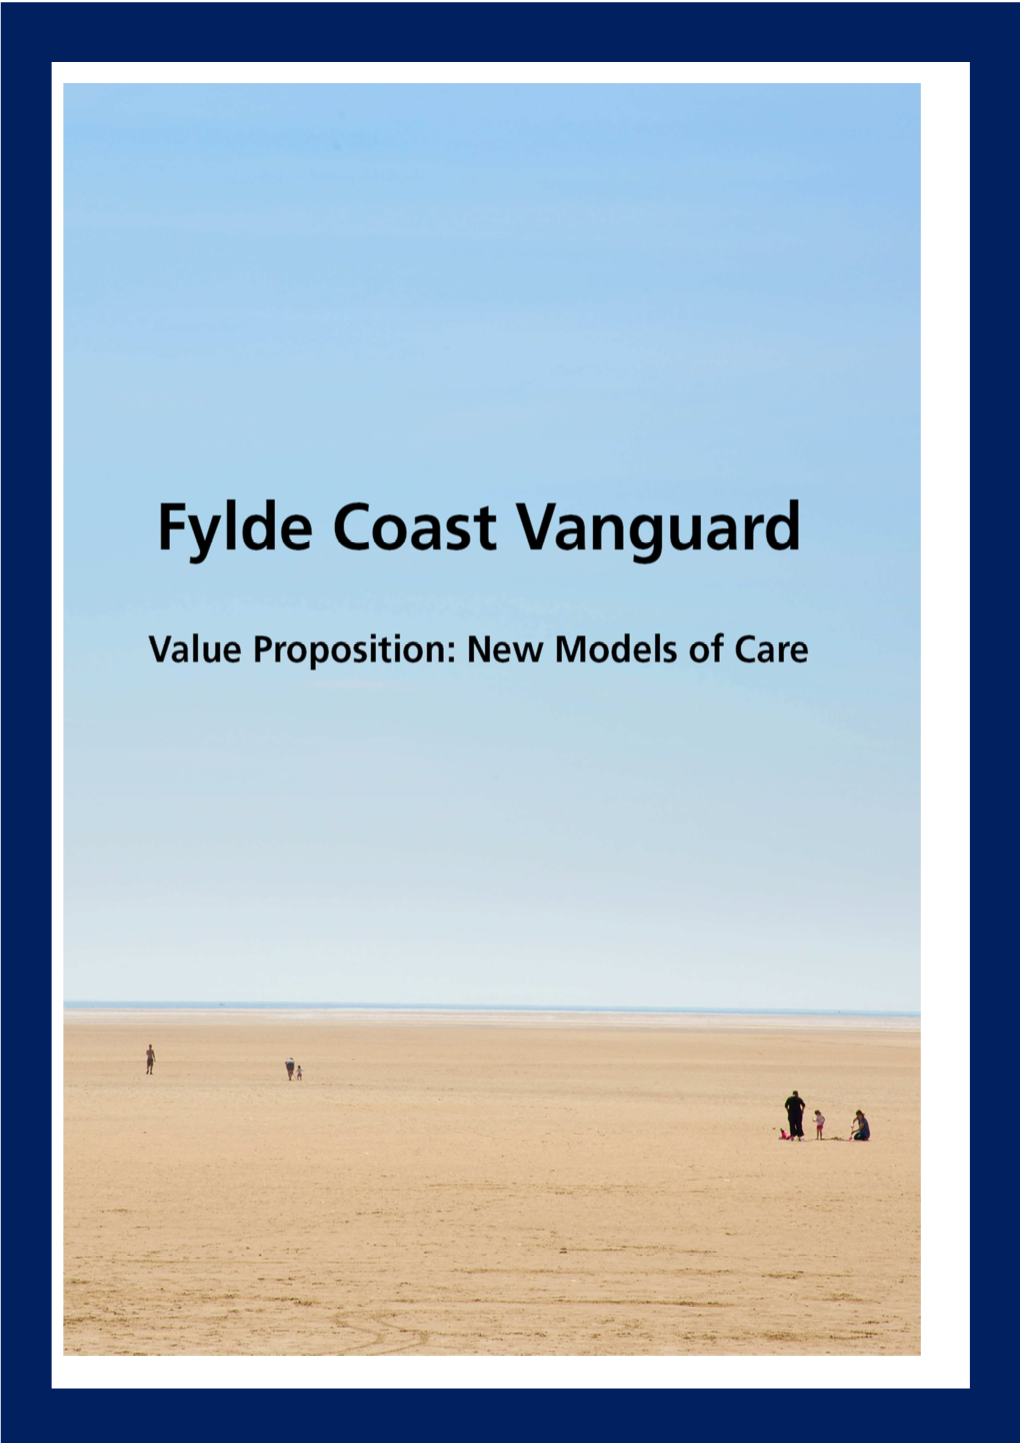 Fylde Coast Vanguard Programme Board